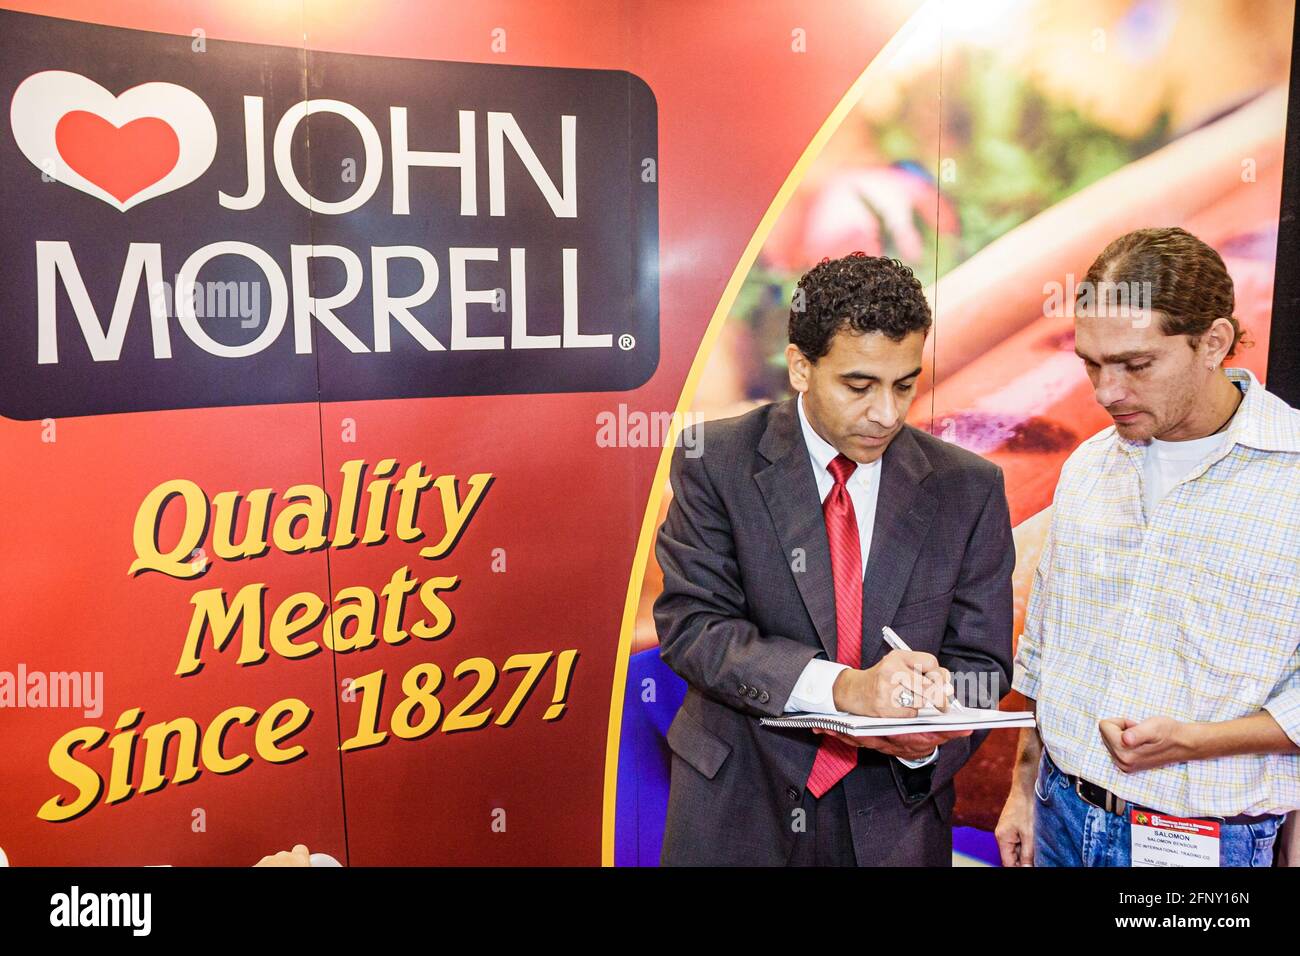 Florida,Miami Beach Convention Center,Americas Food & Beverage Show trade Hispanic men man John Morrell Quality Meats representative,talking customer Stock Photo